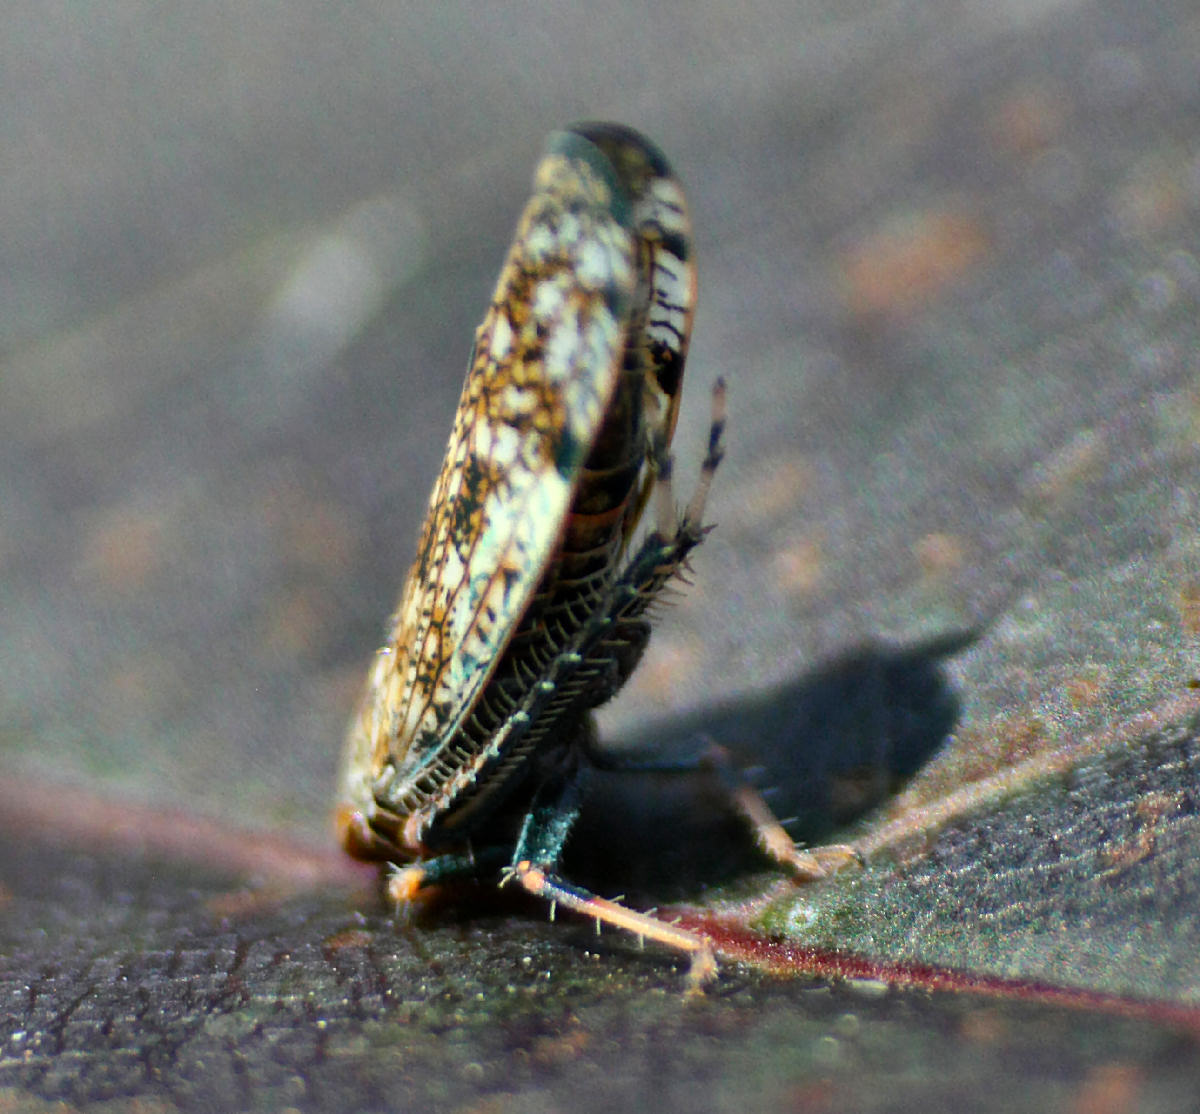 Cicadellidae: Orientus ishidae della Lombardia